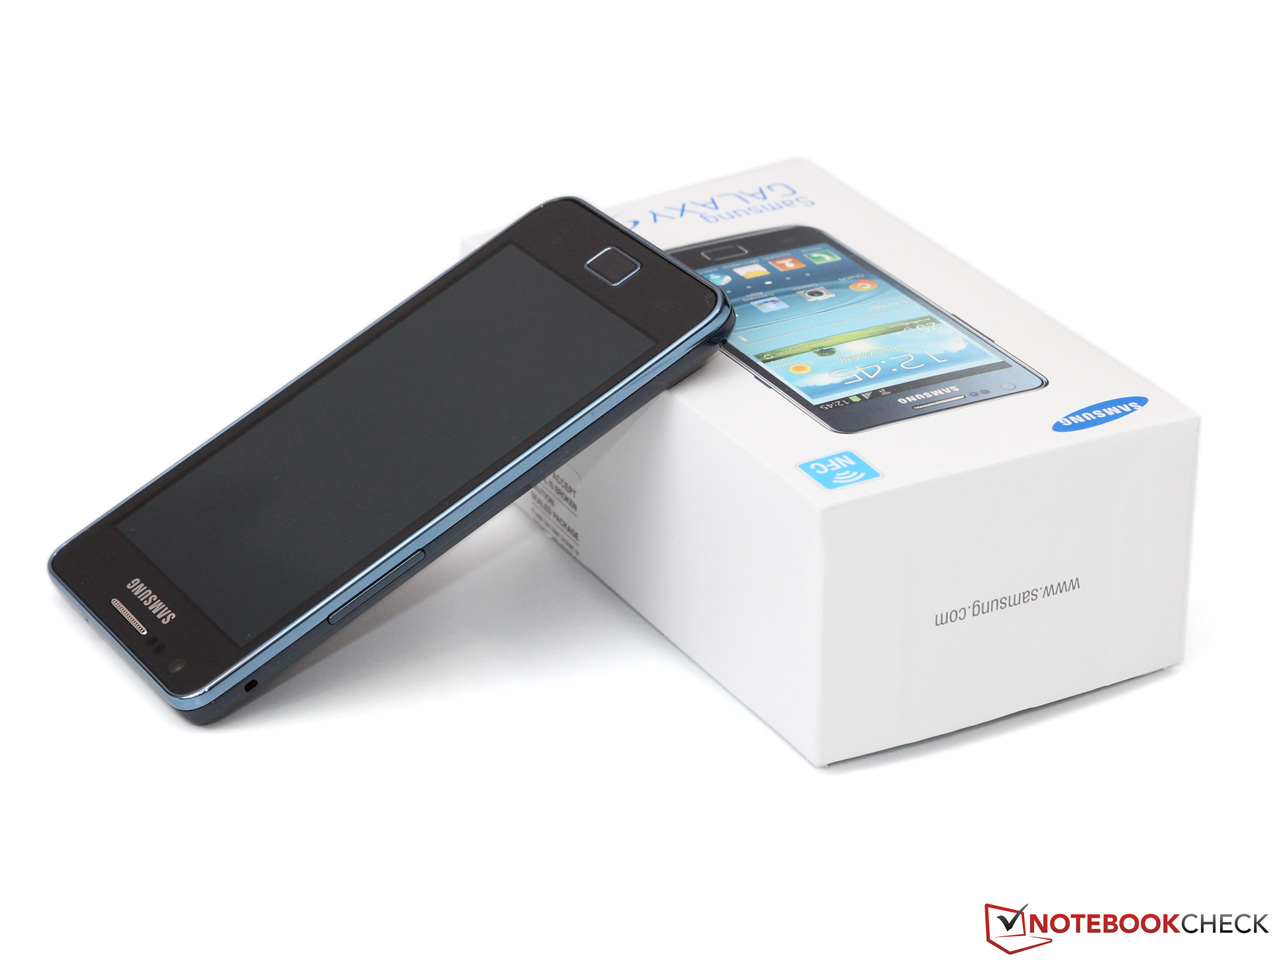 Roos doen alsof weigeren Review Samsung Galaxy S2 Plus (i9105P) Smartphone - NotebookCheck.net  Reviews